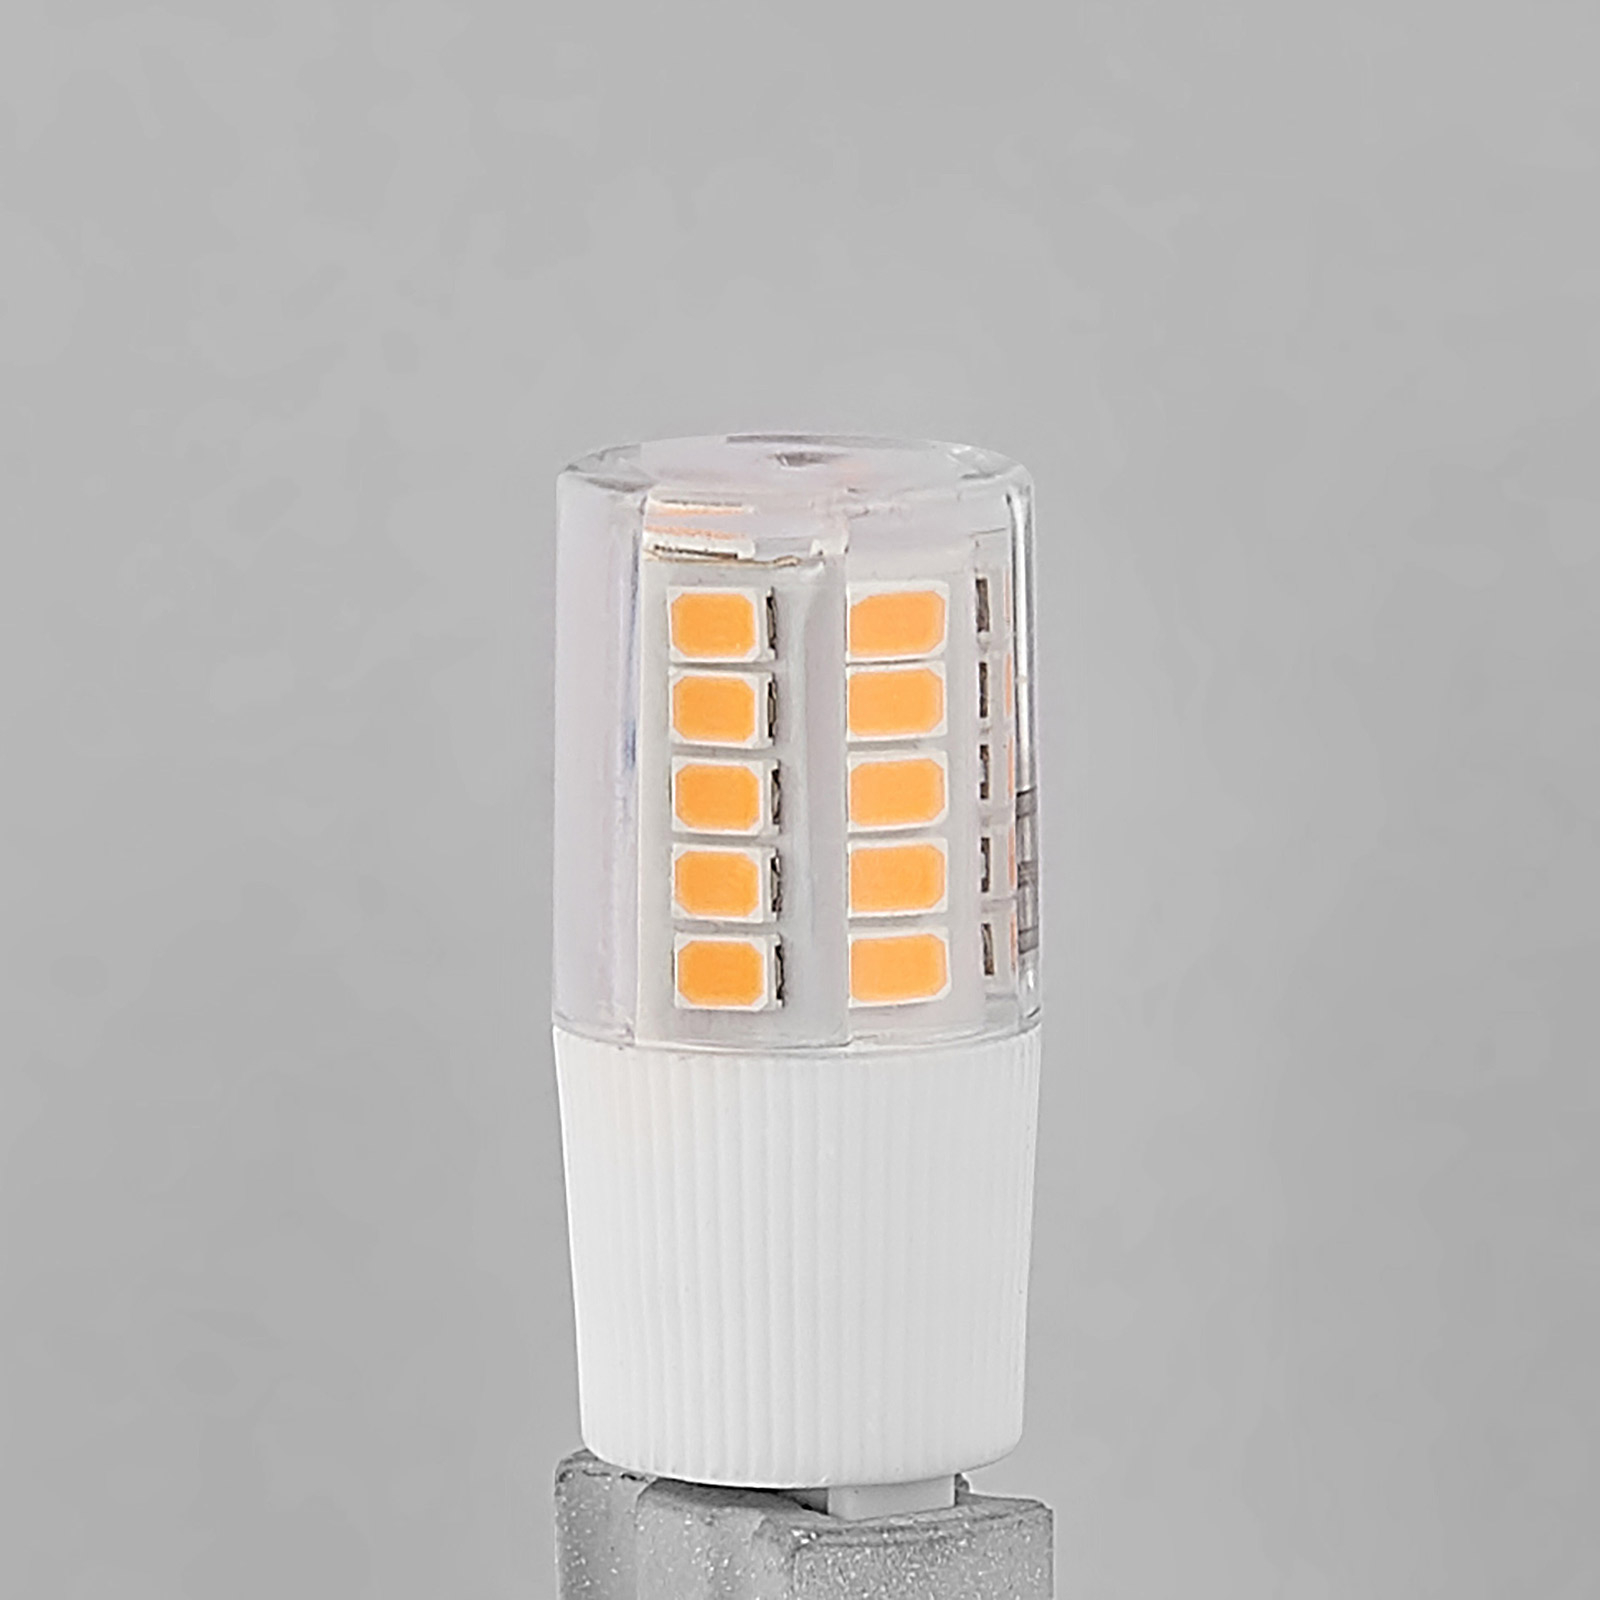 Arcchio bombilla LED bi-pin G9 4,5W 2.700K